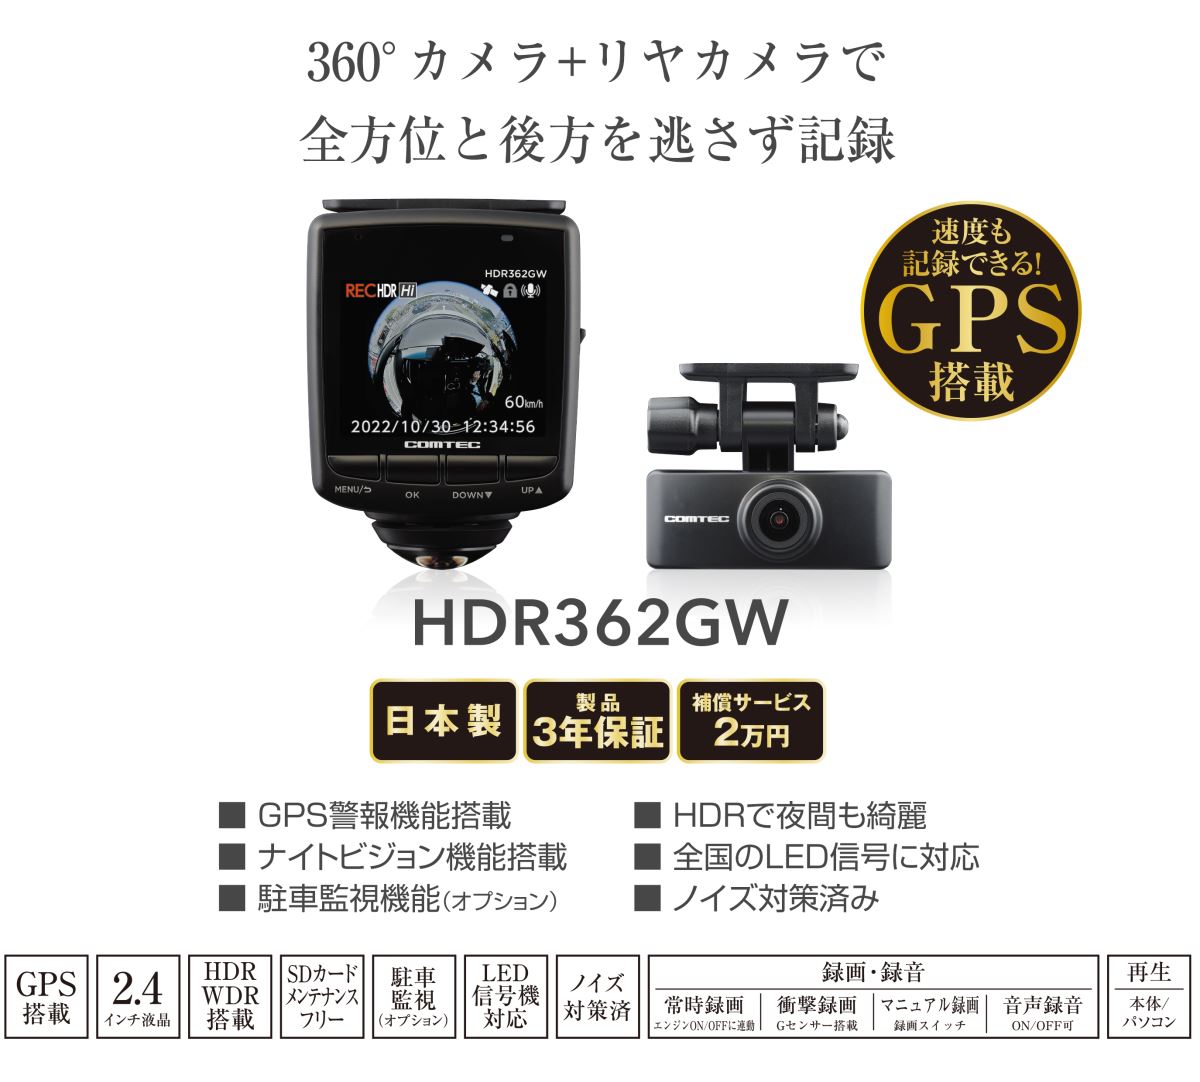 HDR362GW